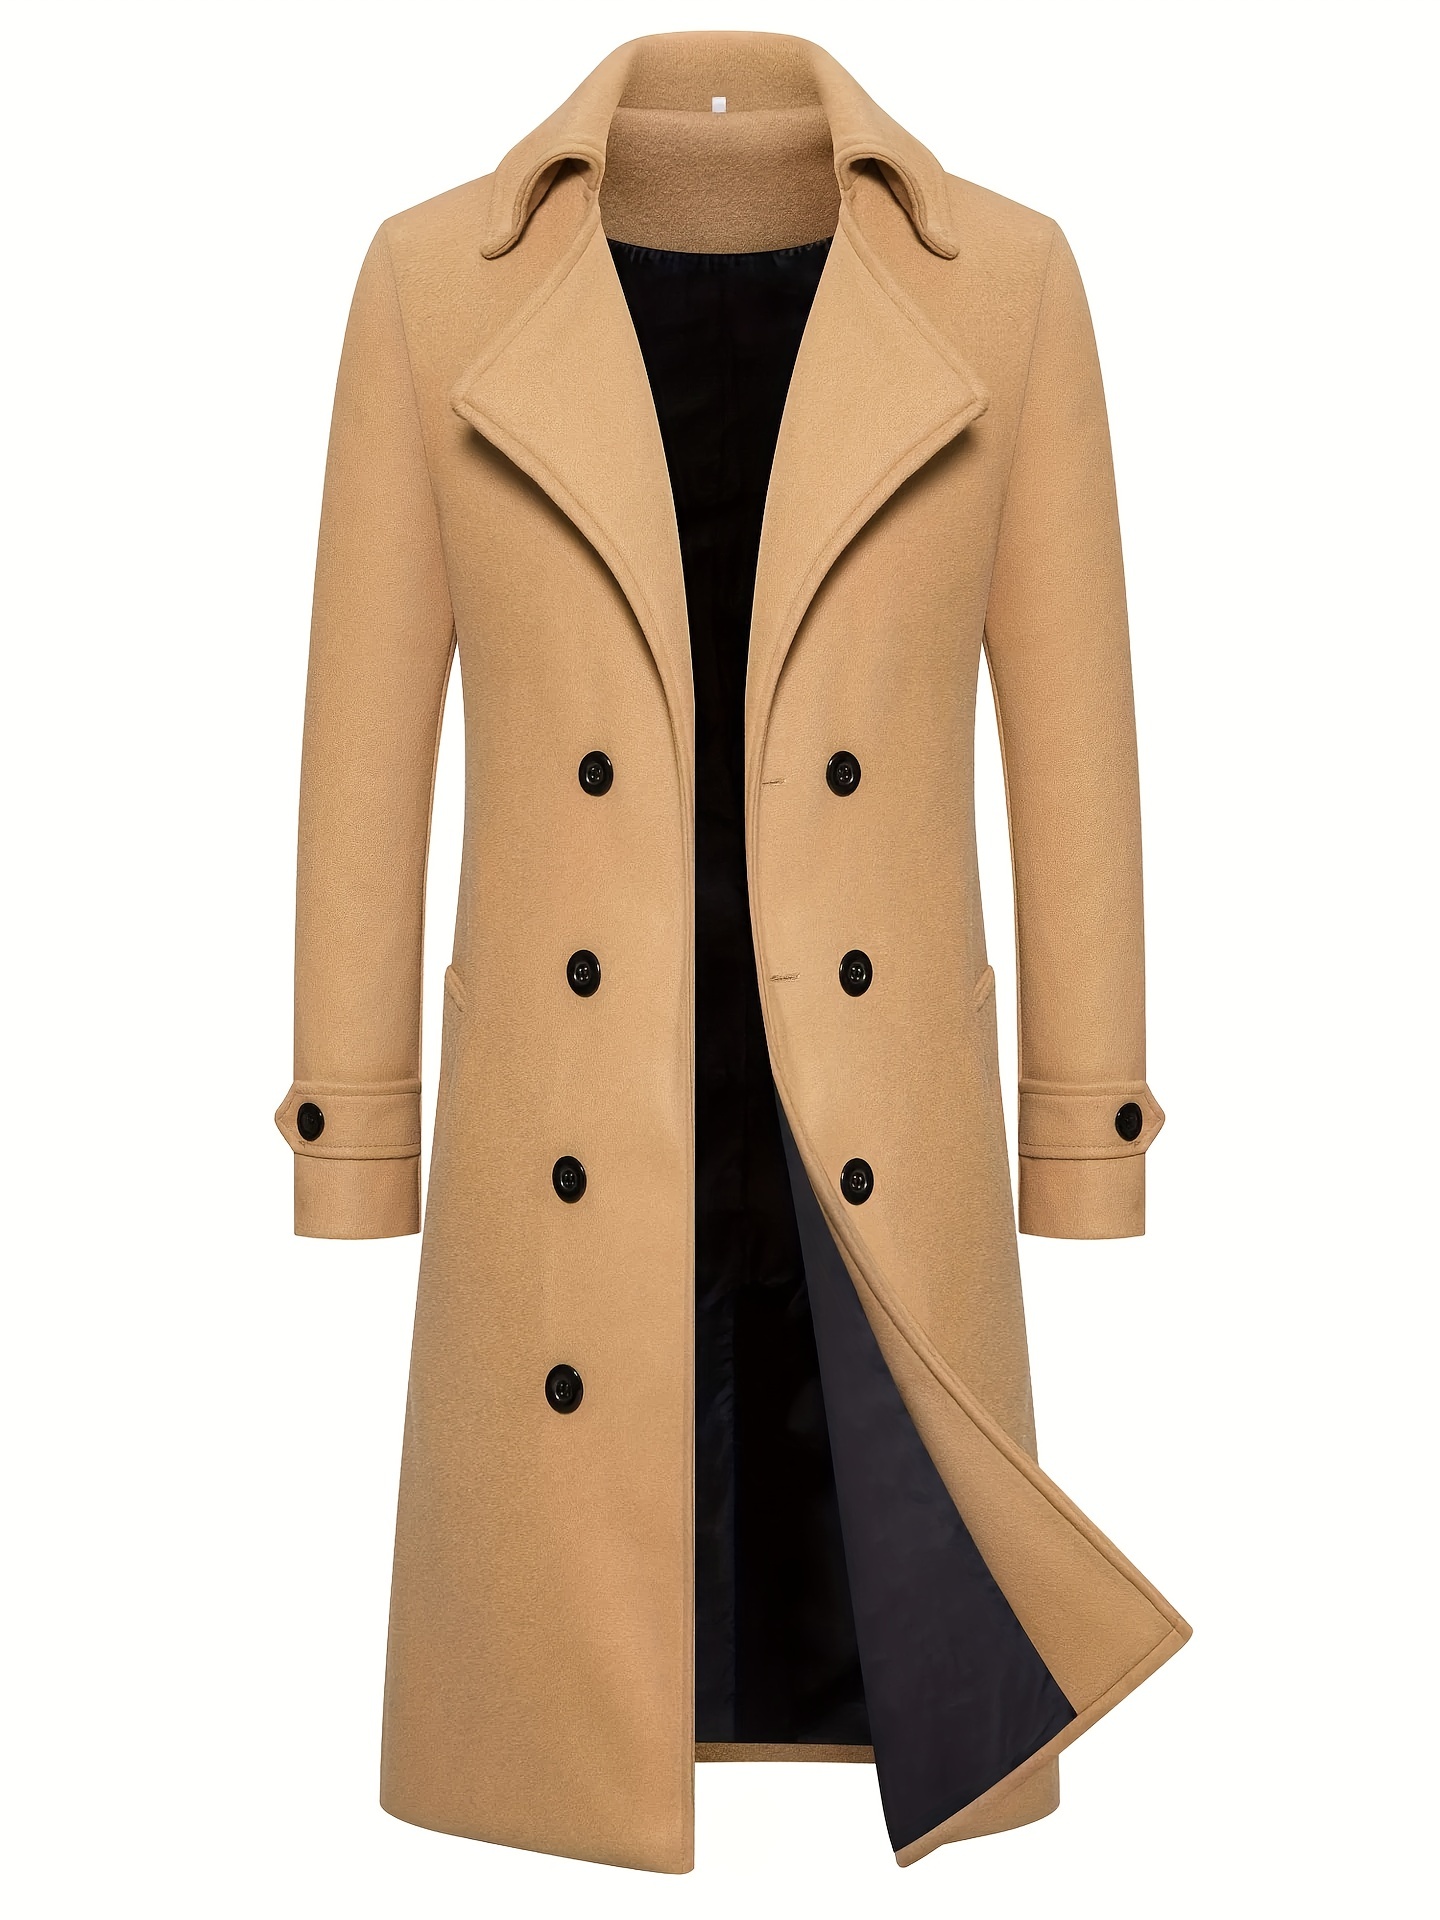 EM Designer Men Wool Trench Coat  Long coat men, Overcoat jacket, Faux fur  collar coat